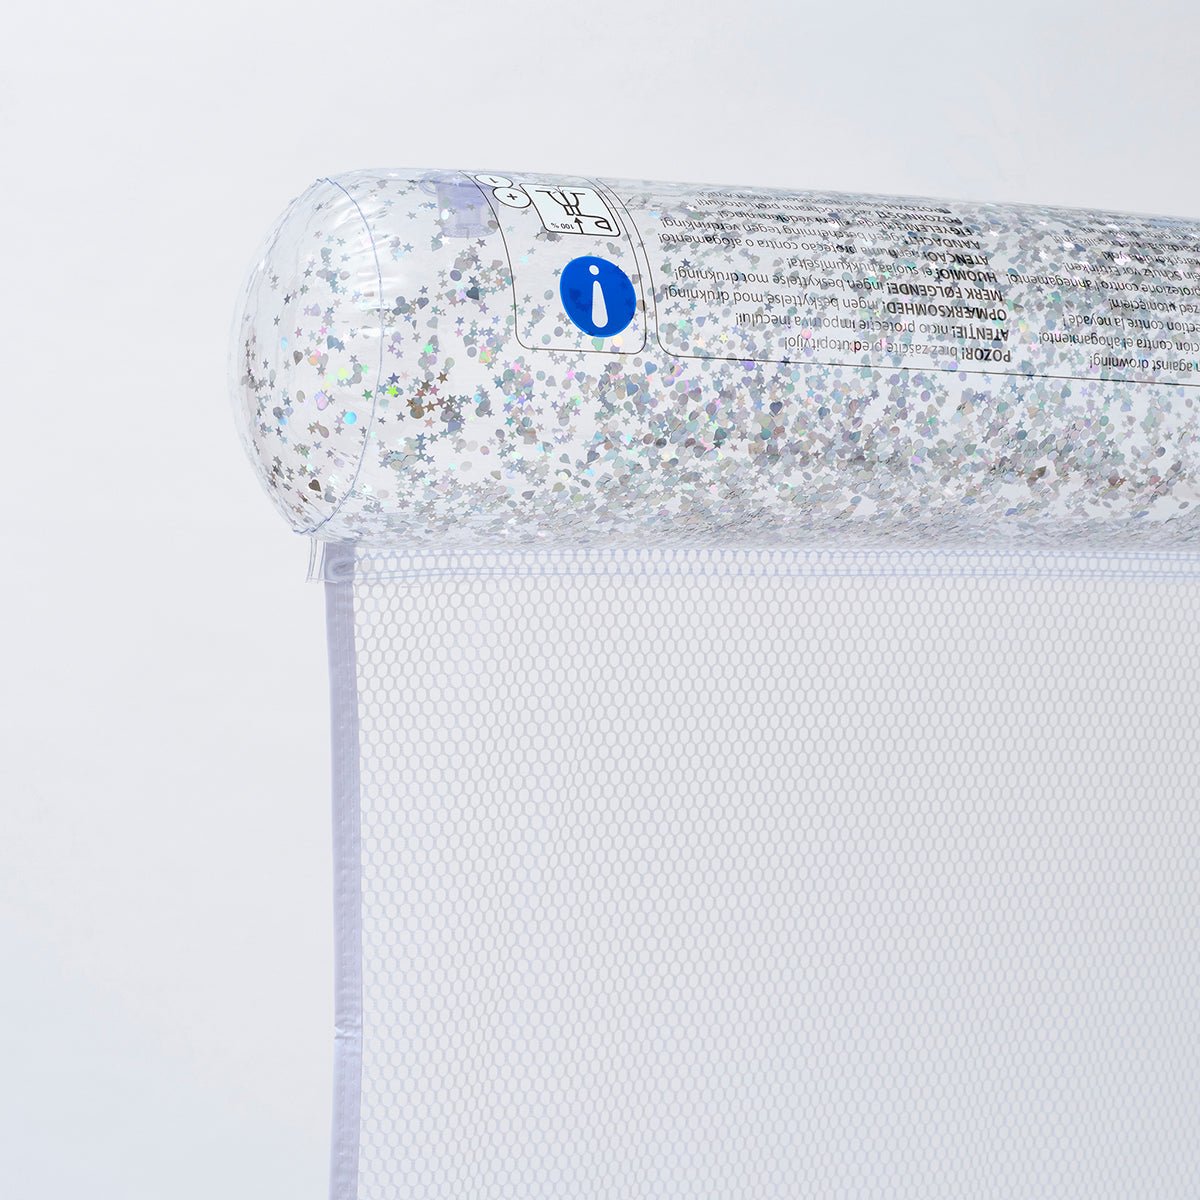 SUNNYLiFE Transparent Inflatable Bolster Hammock Float Glitter - S3LHAMGL